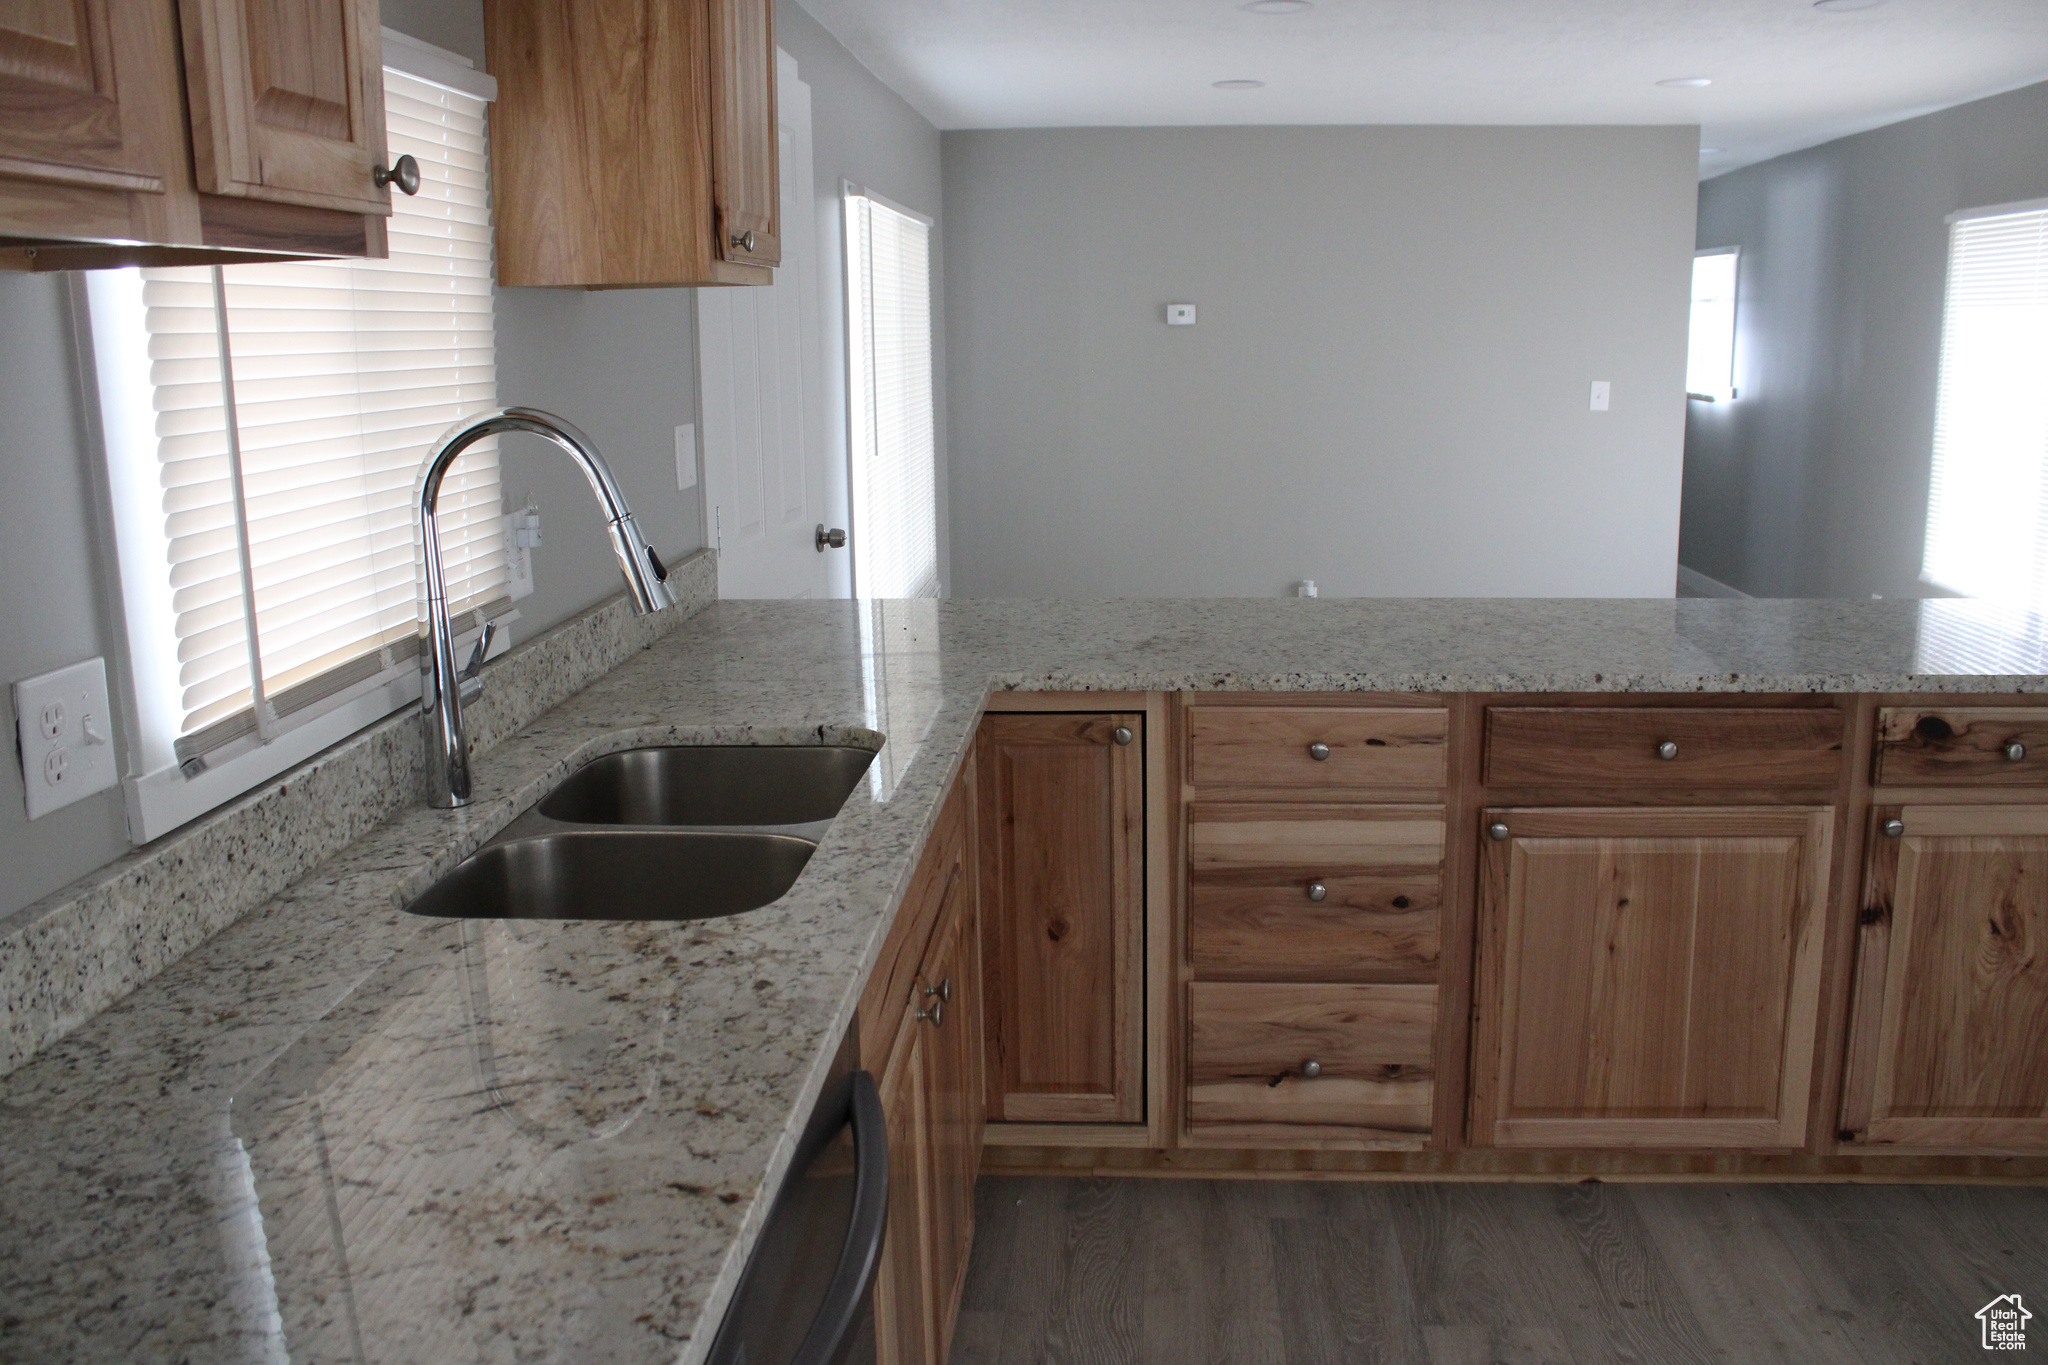 Kitchen with sink, kitchen peninsula, dark hardwood / wood-style floors, and light stone countertops